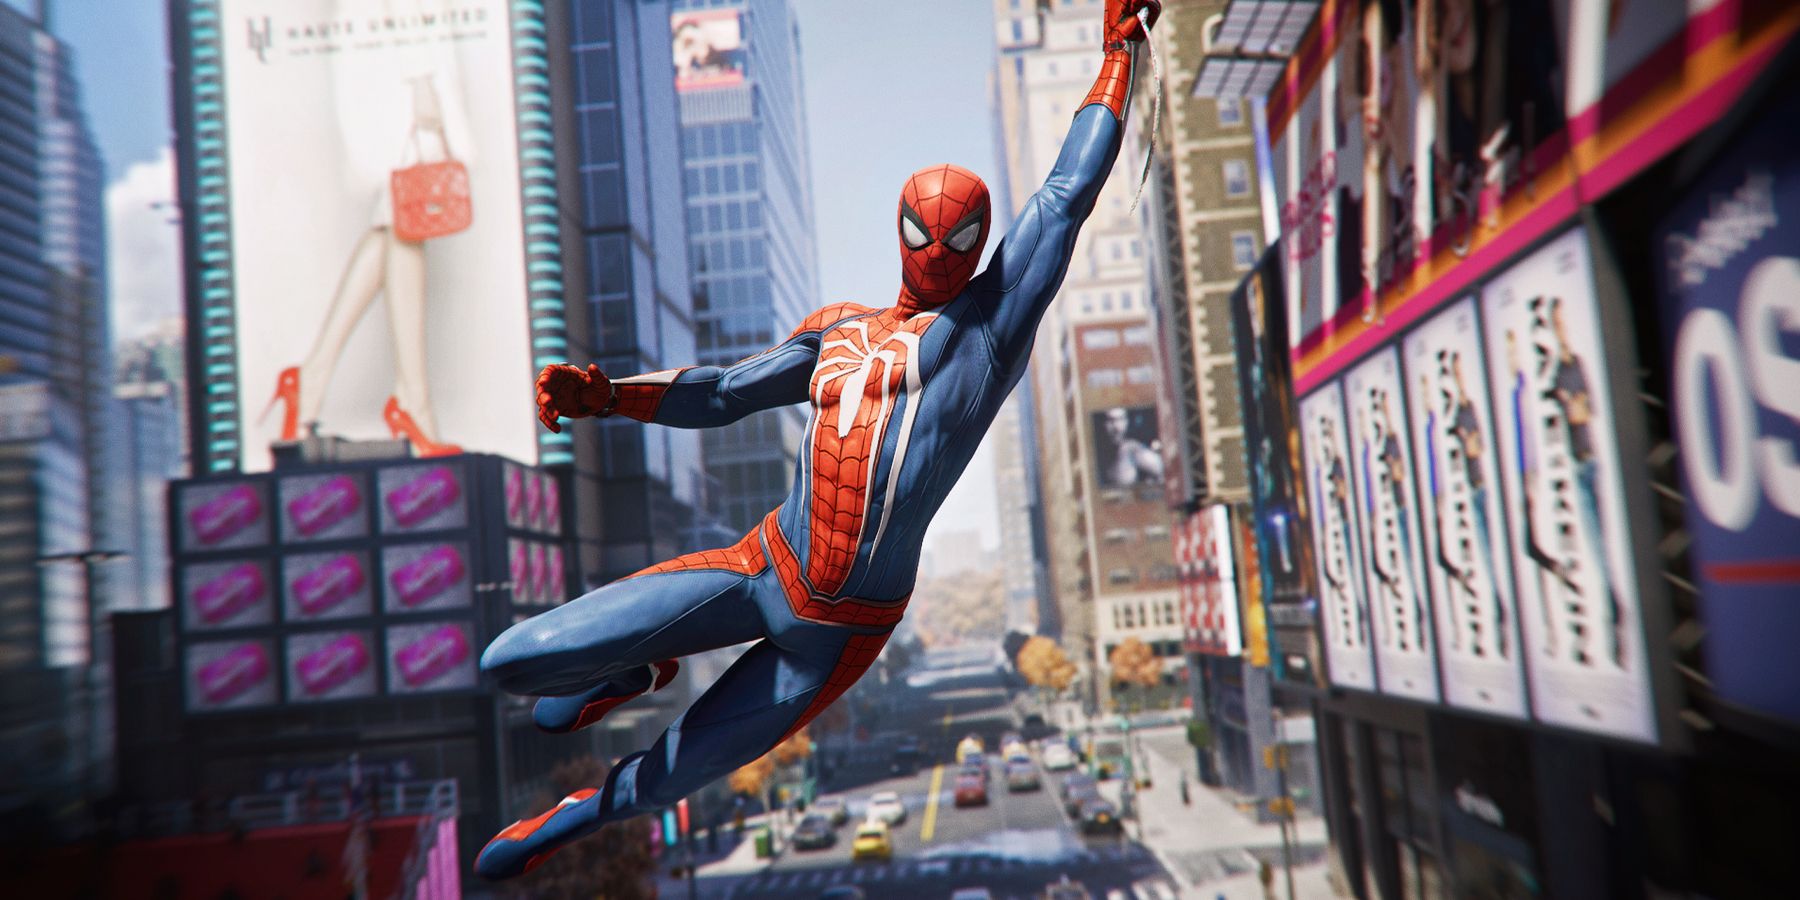 Spider-Man swinging through New York City.